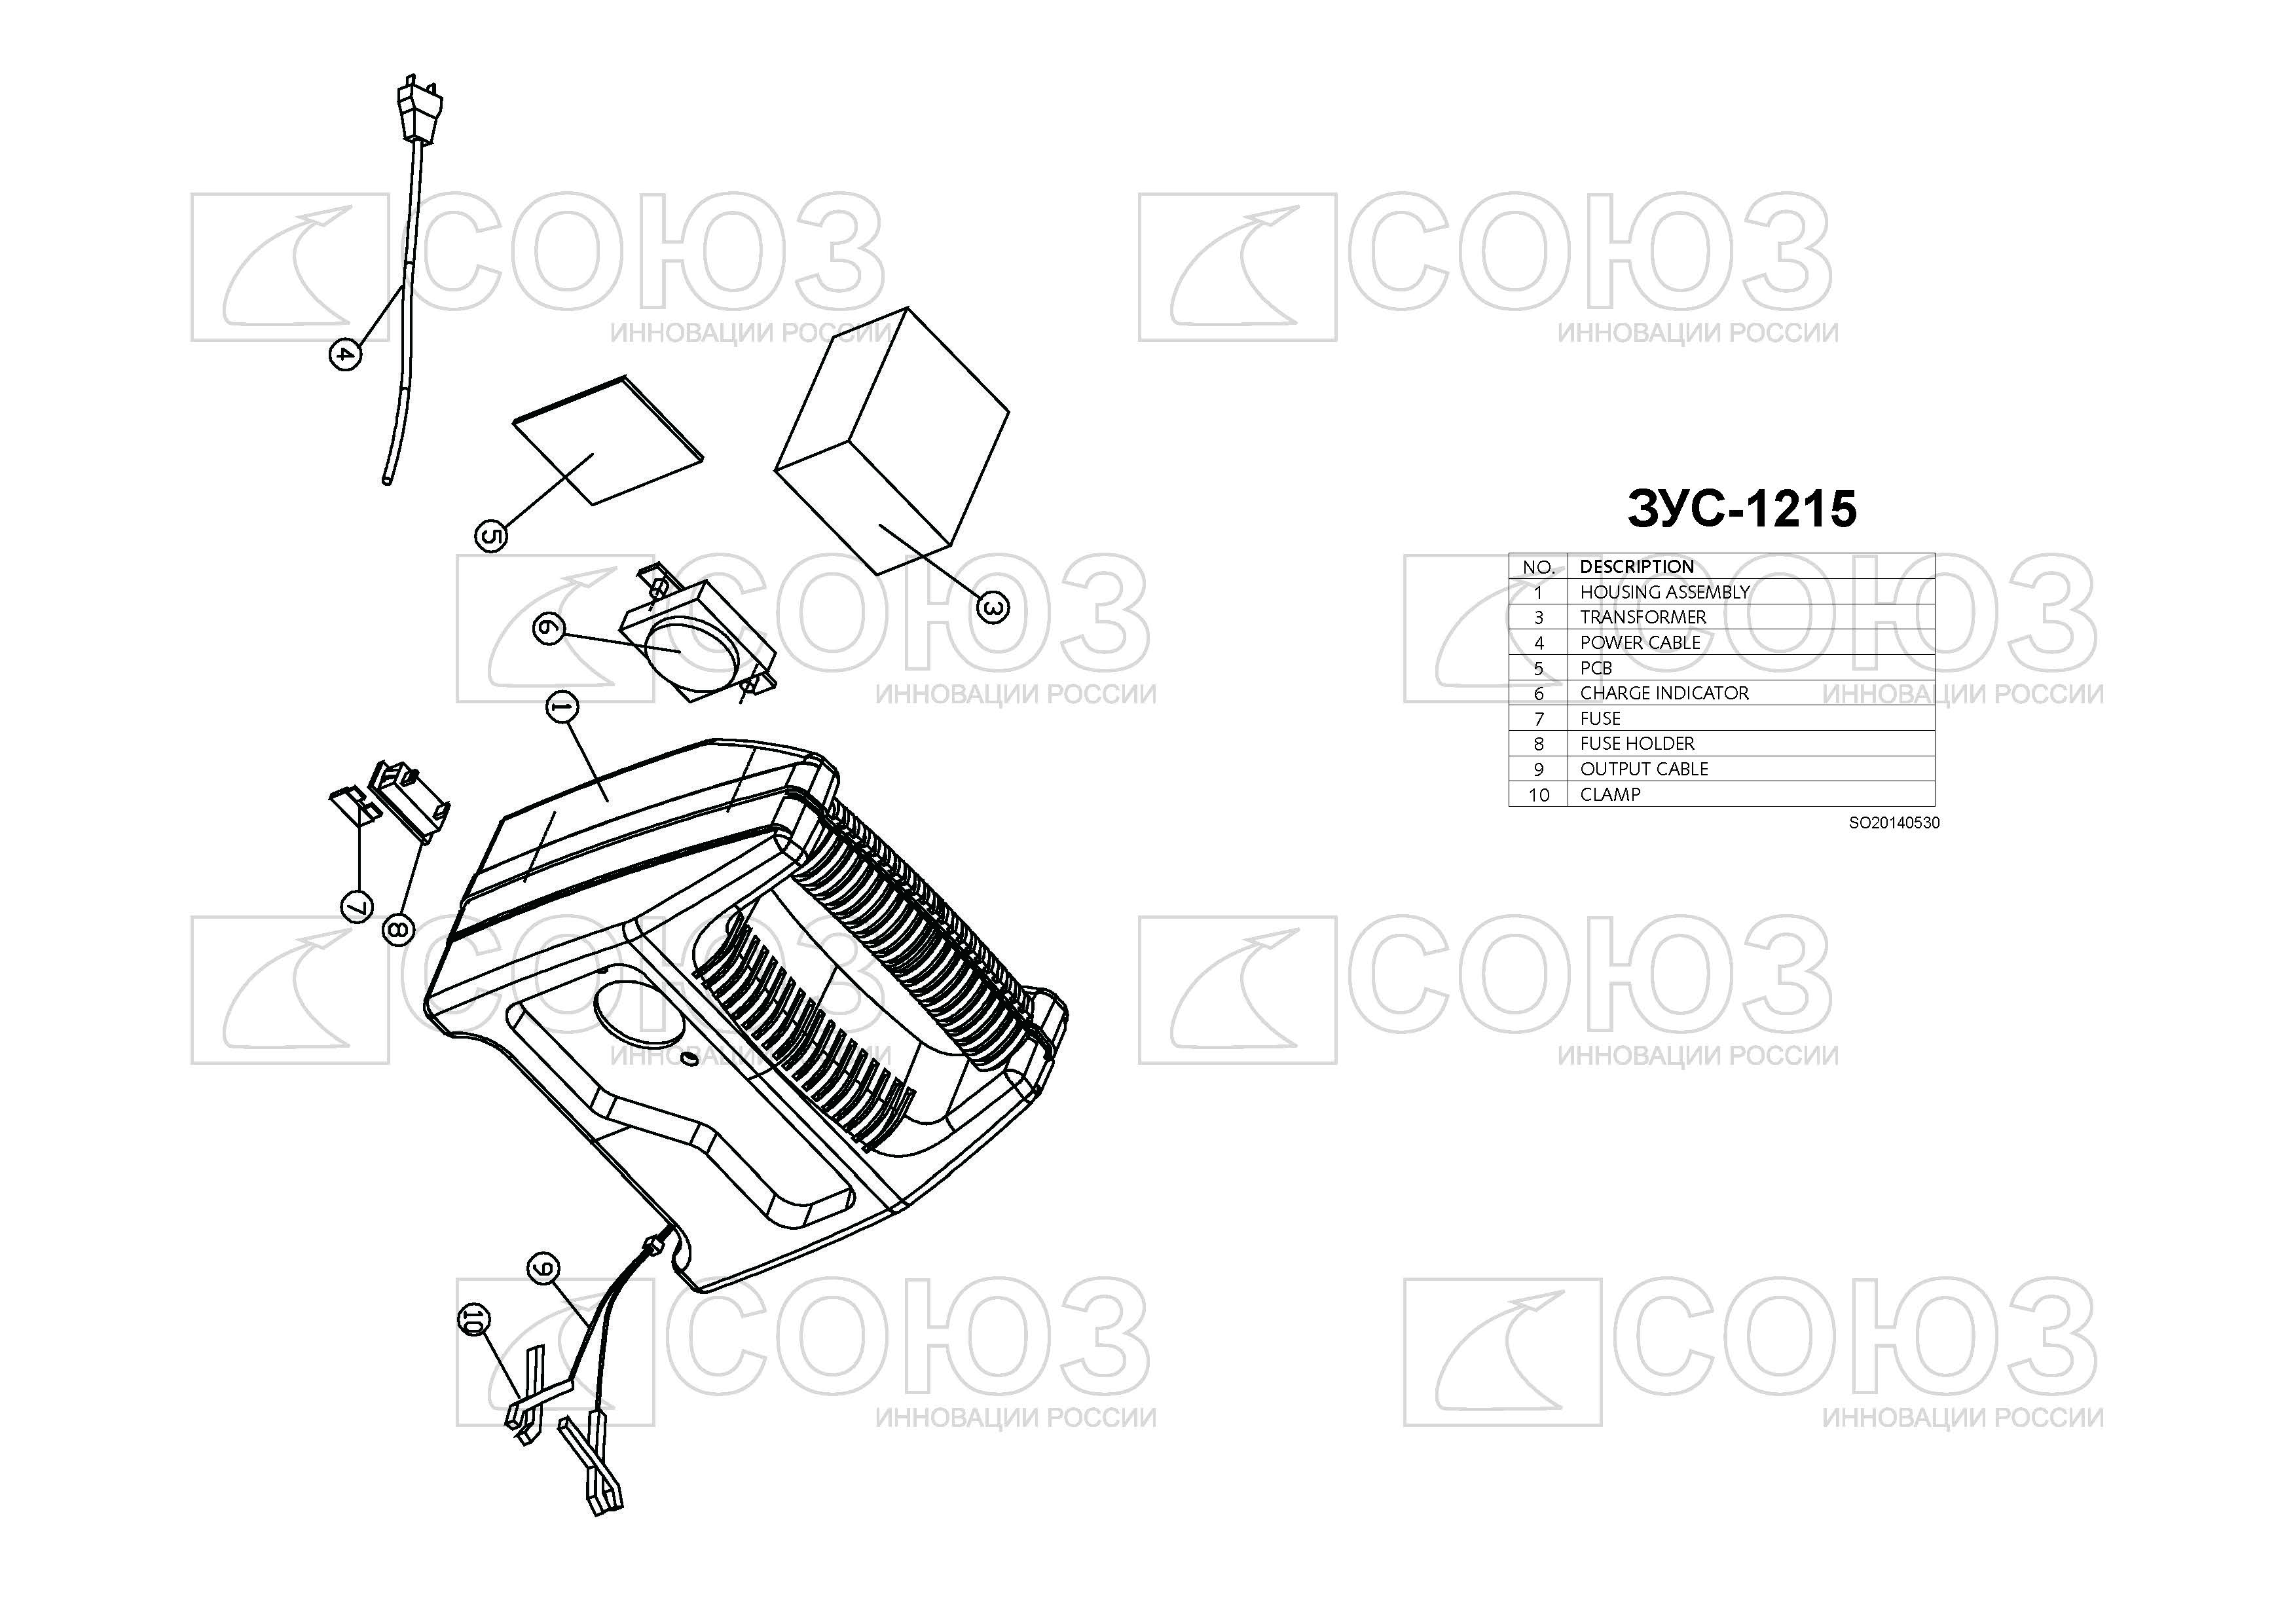 Зарядное устройство СОЮЗ ЗУС-1215 - описание, характеристики, цена .